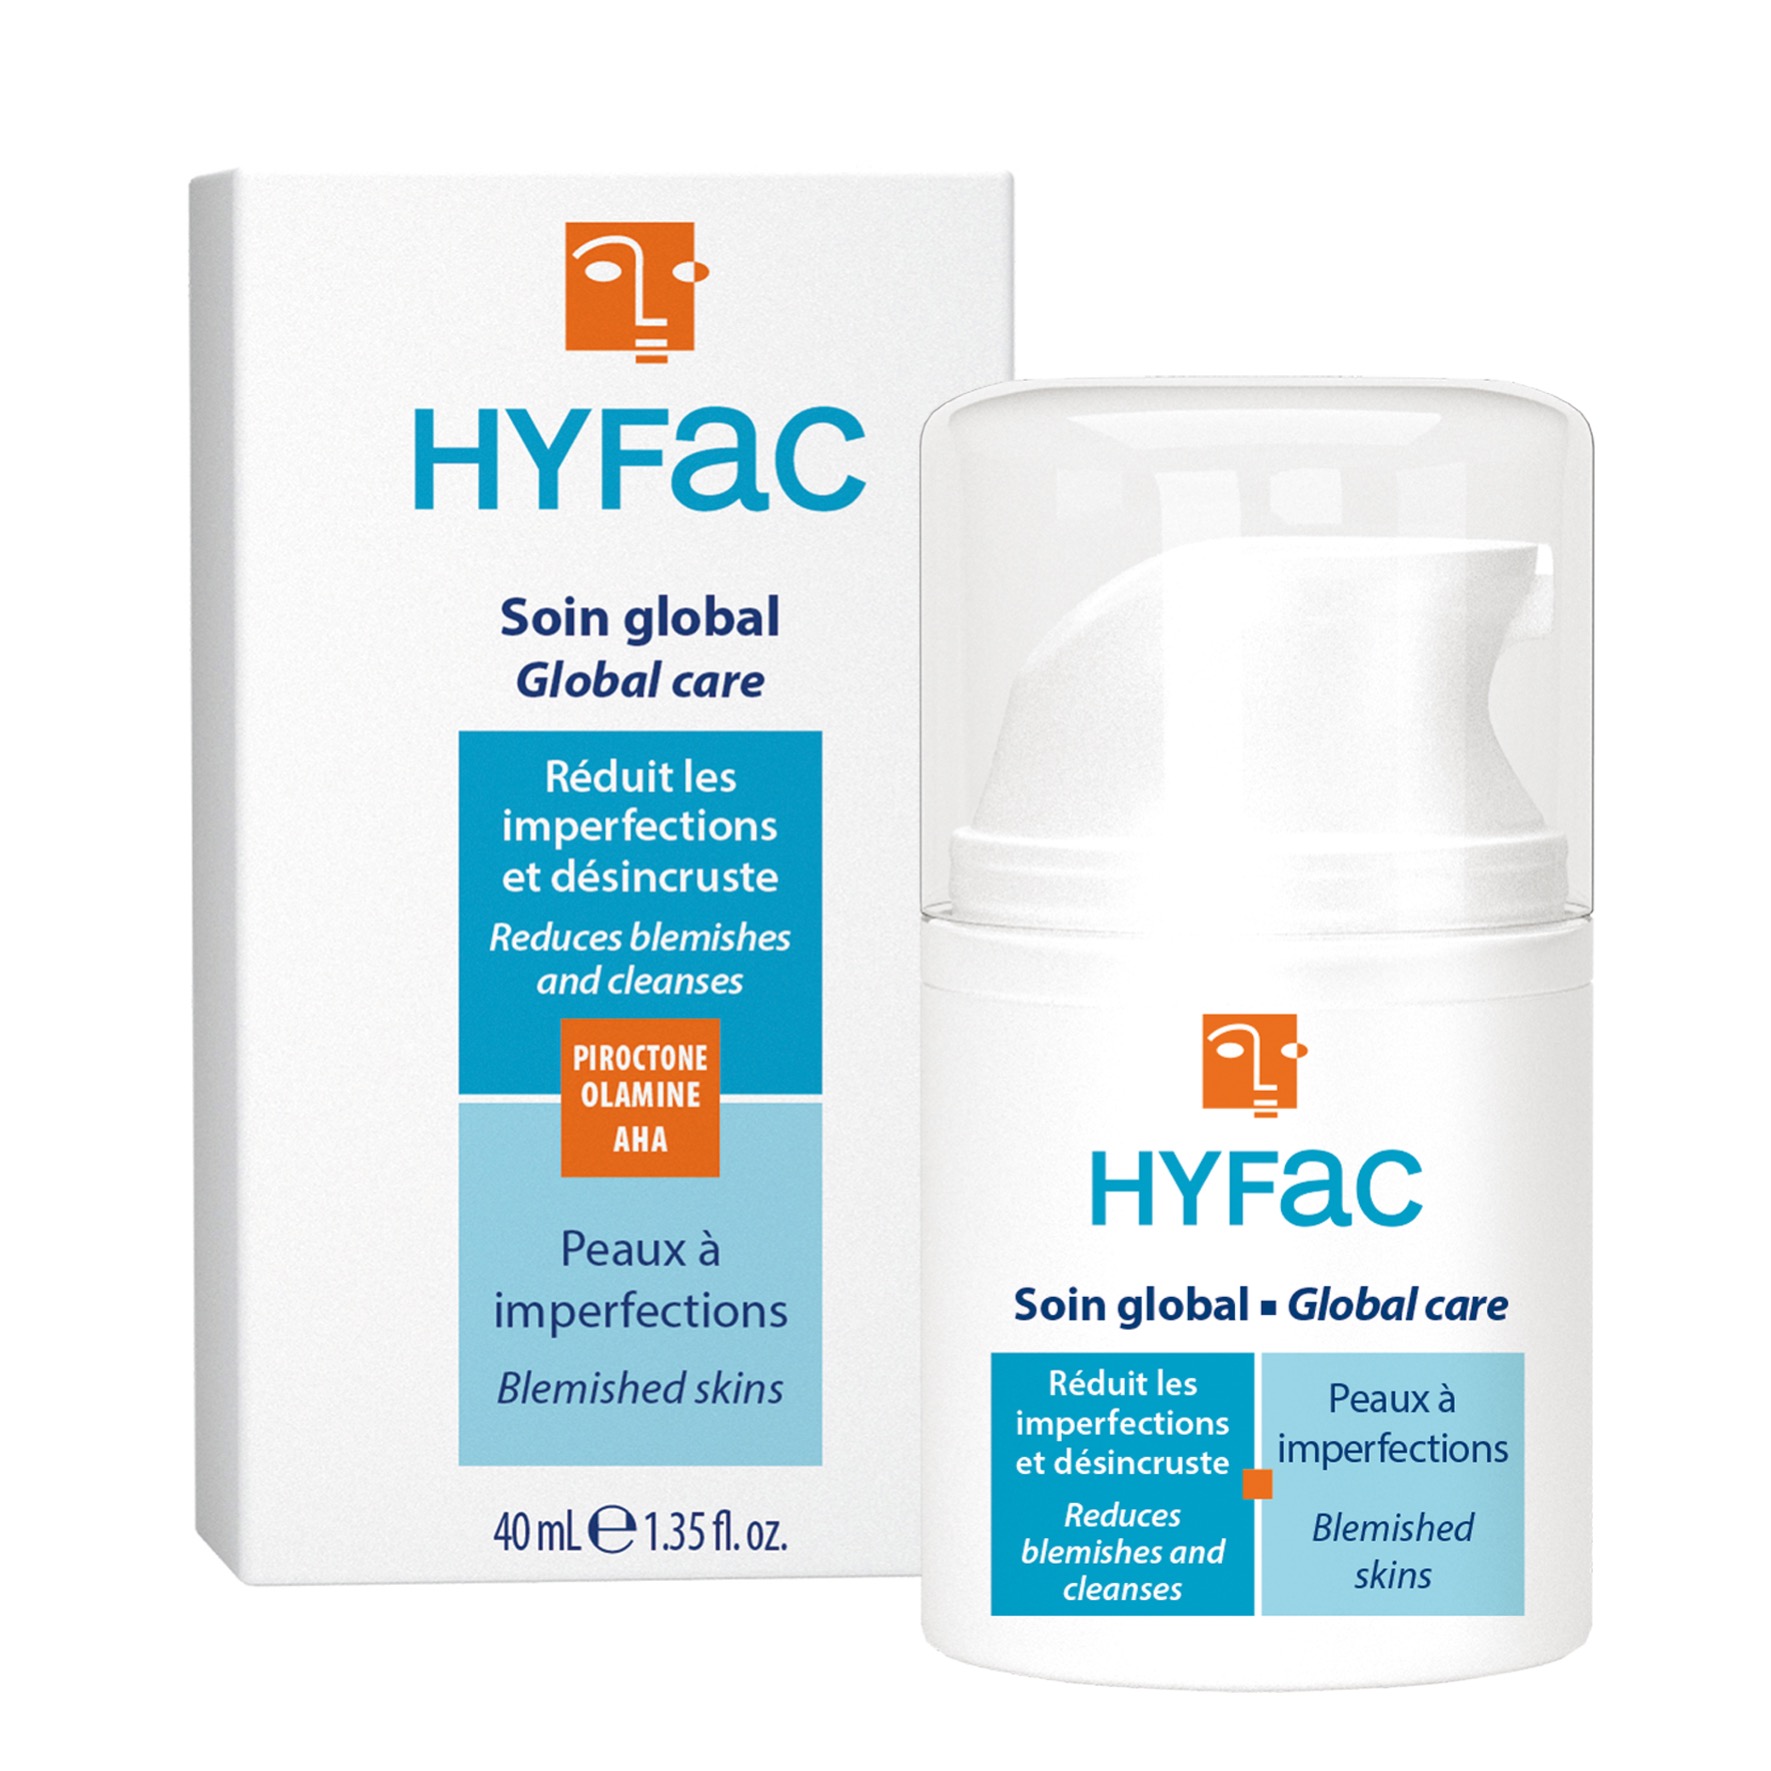 HYFAC Global Anti-Imperfection Care увлажняет и очищает